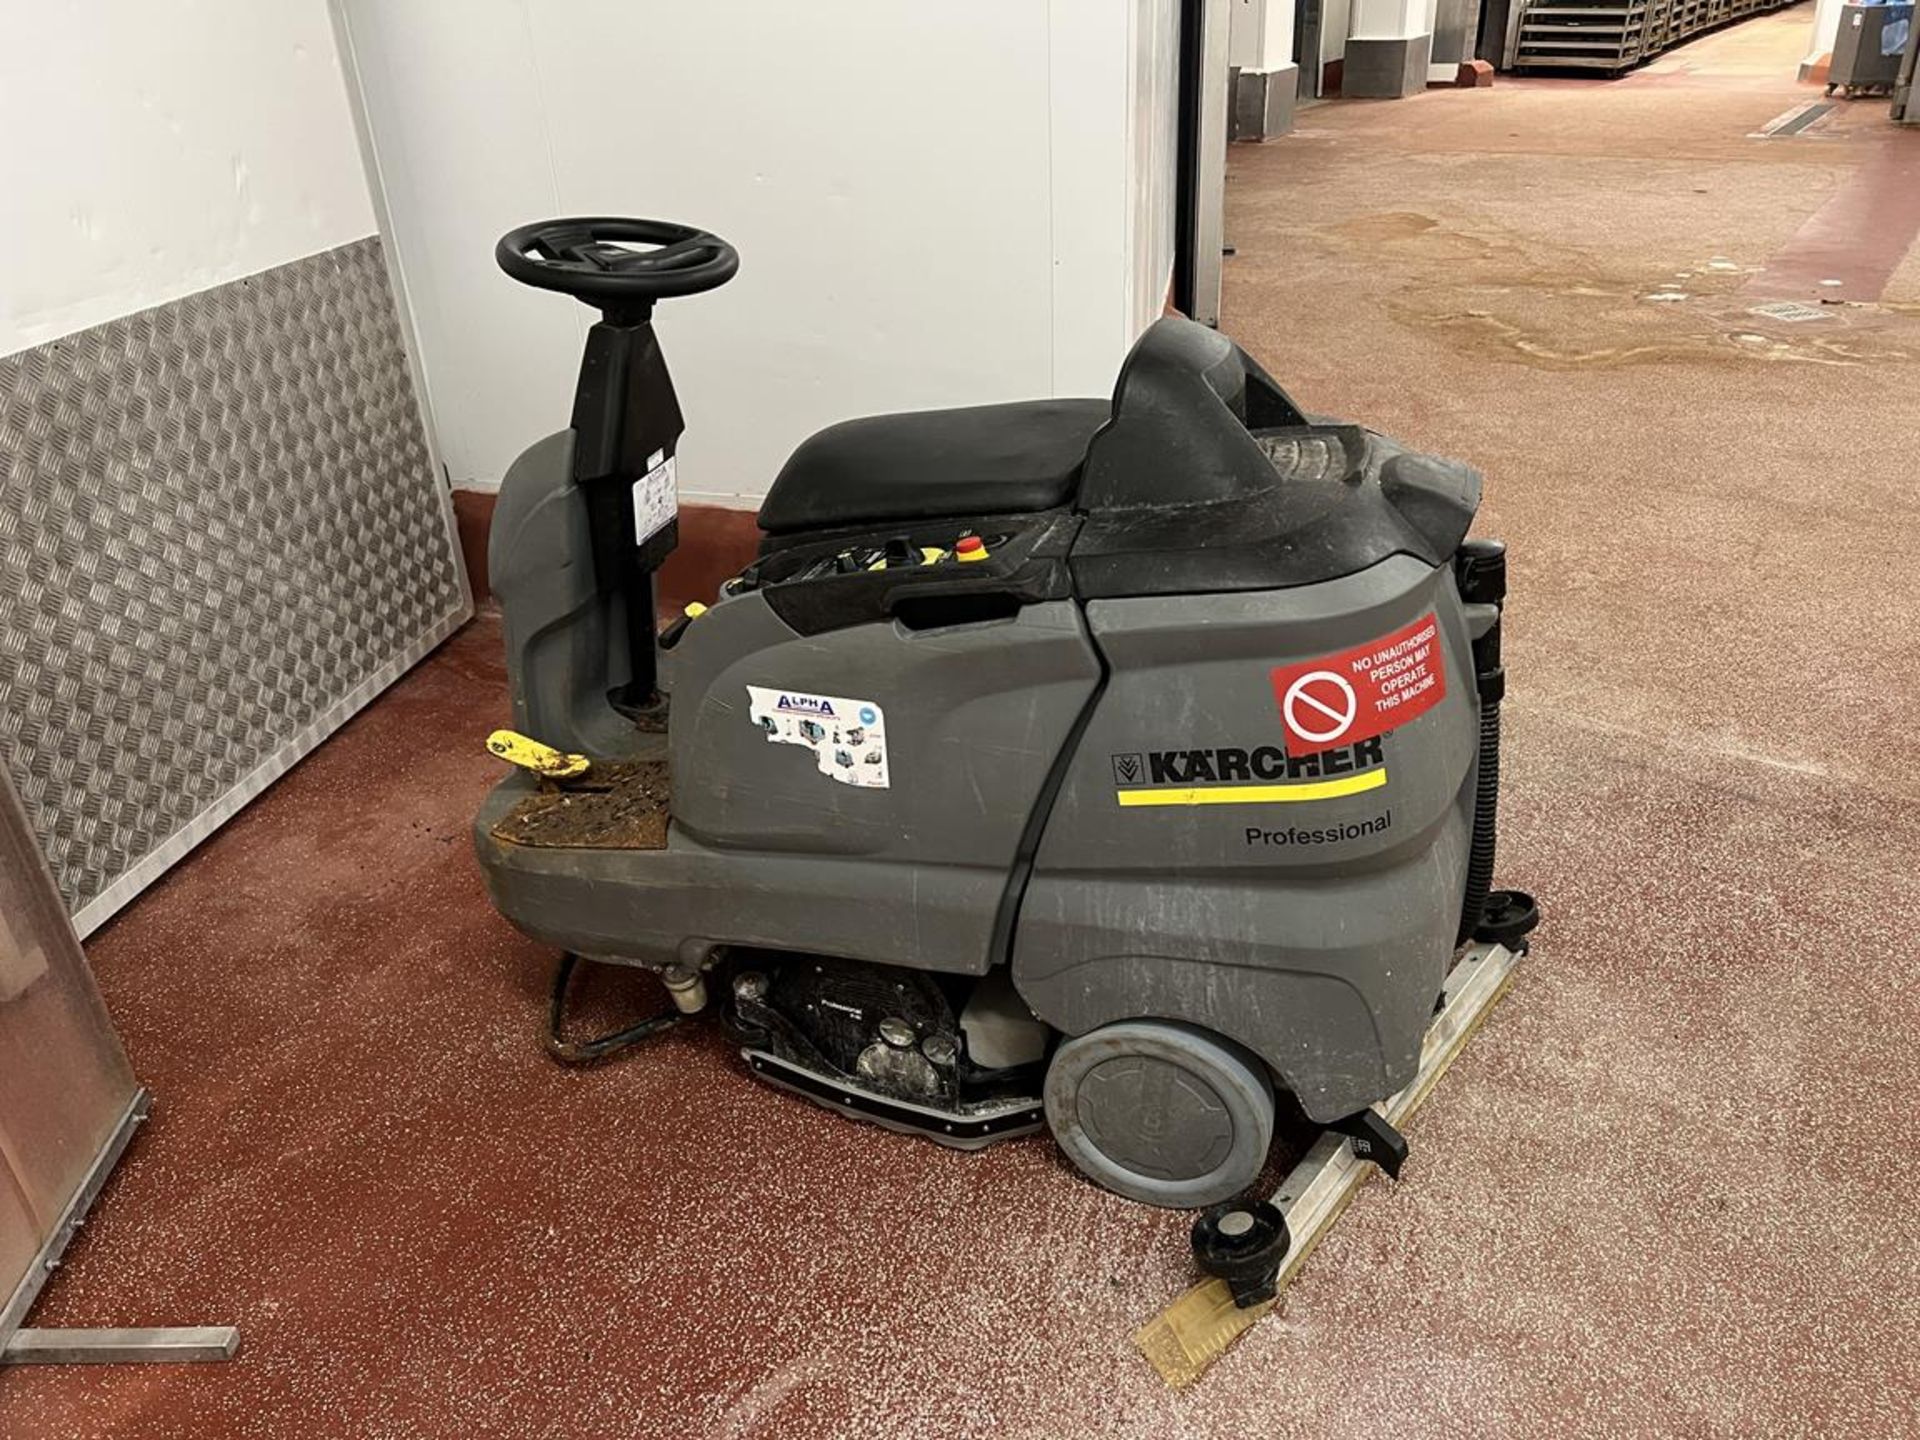 Karcher Professional R45 ride on floor scrubber